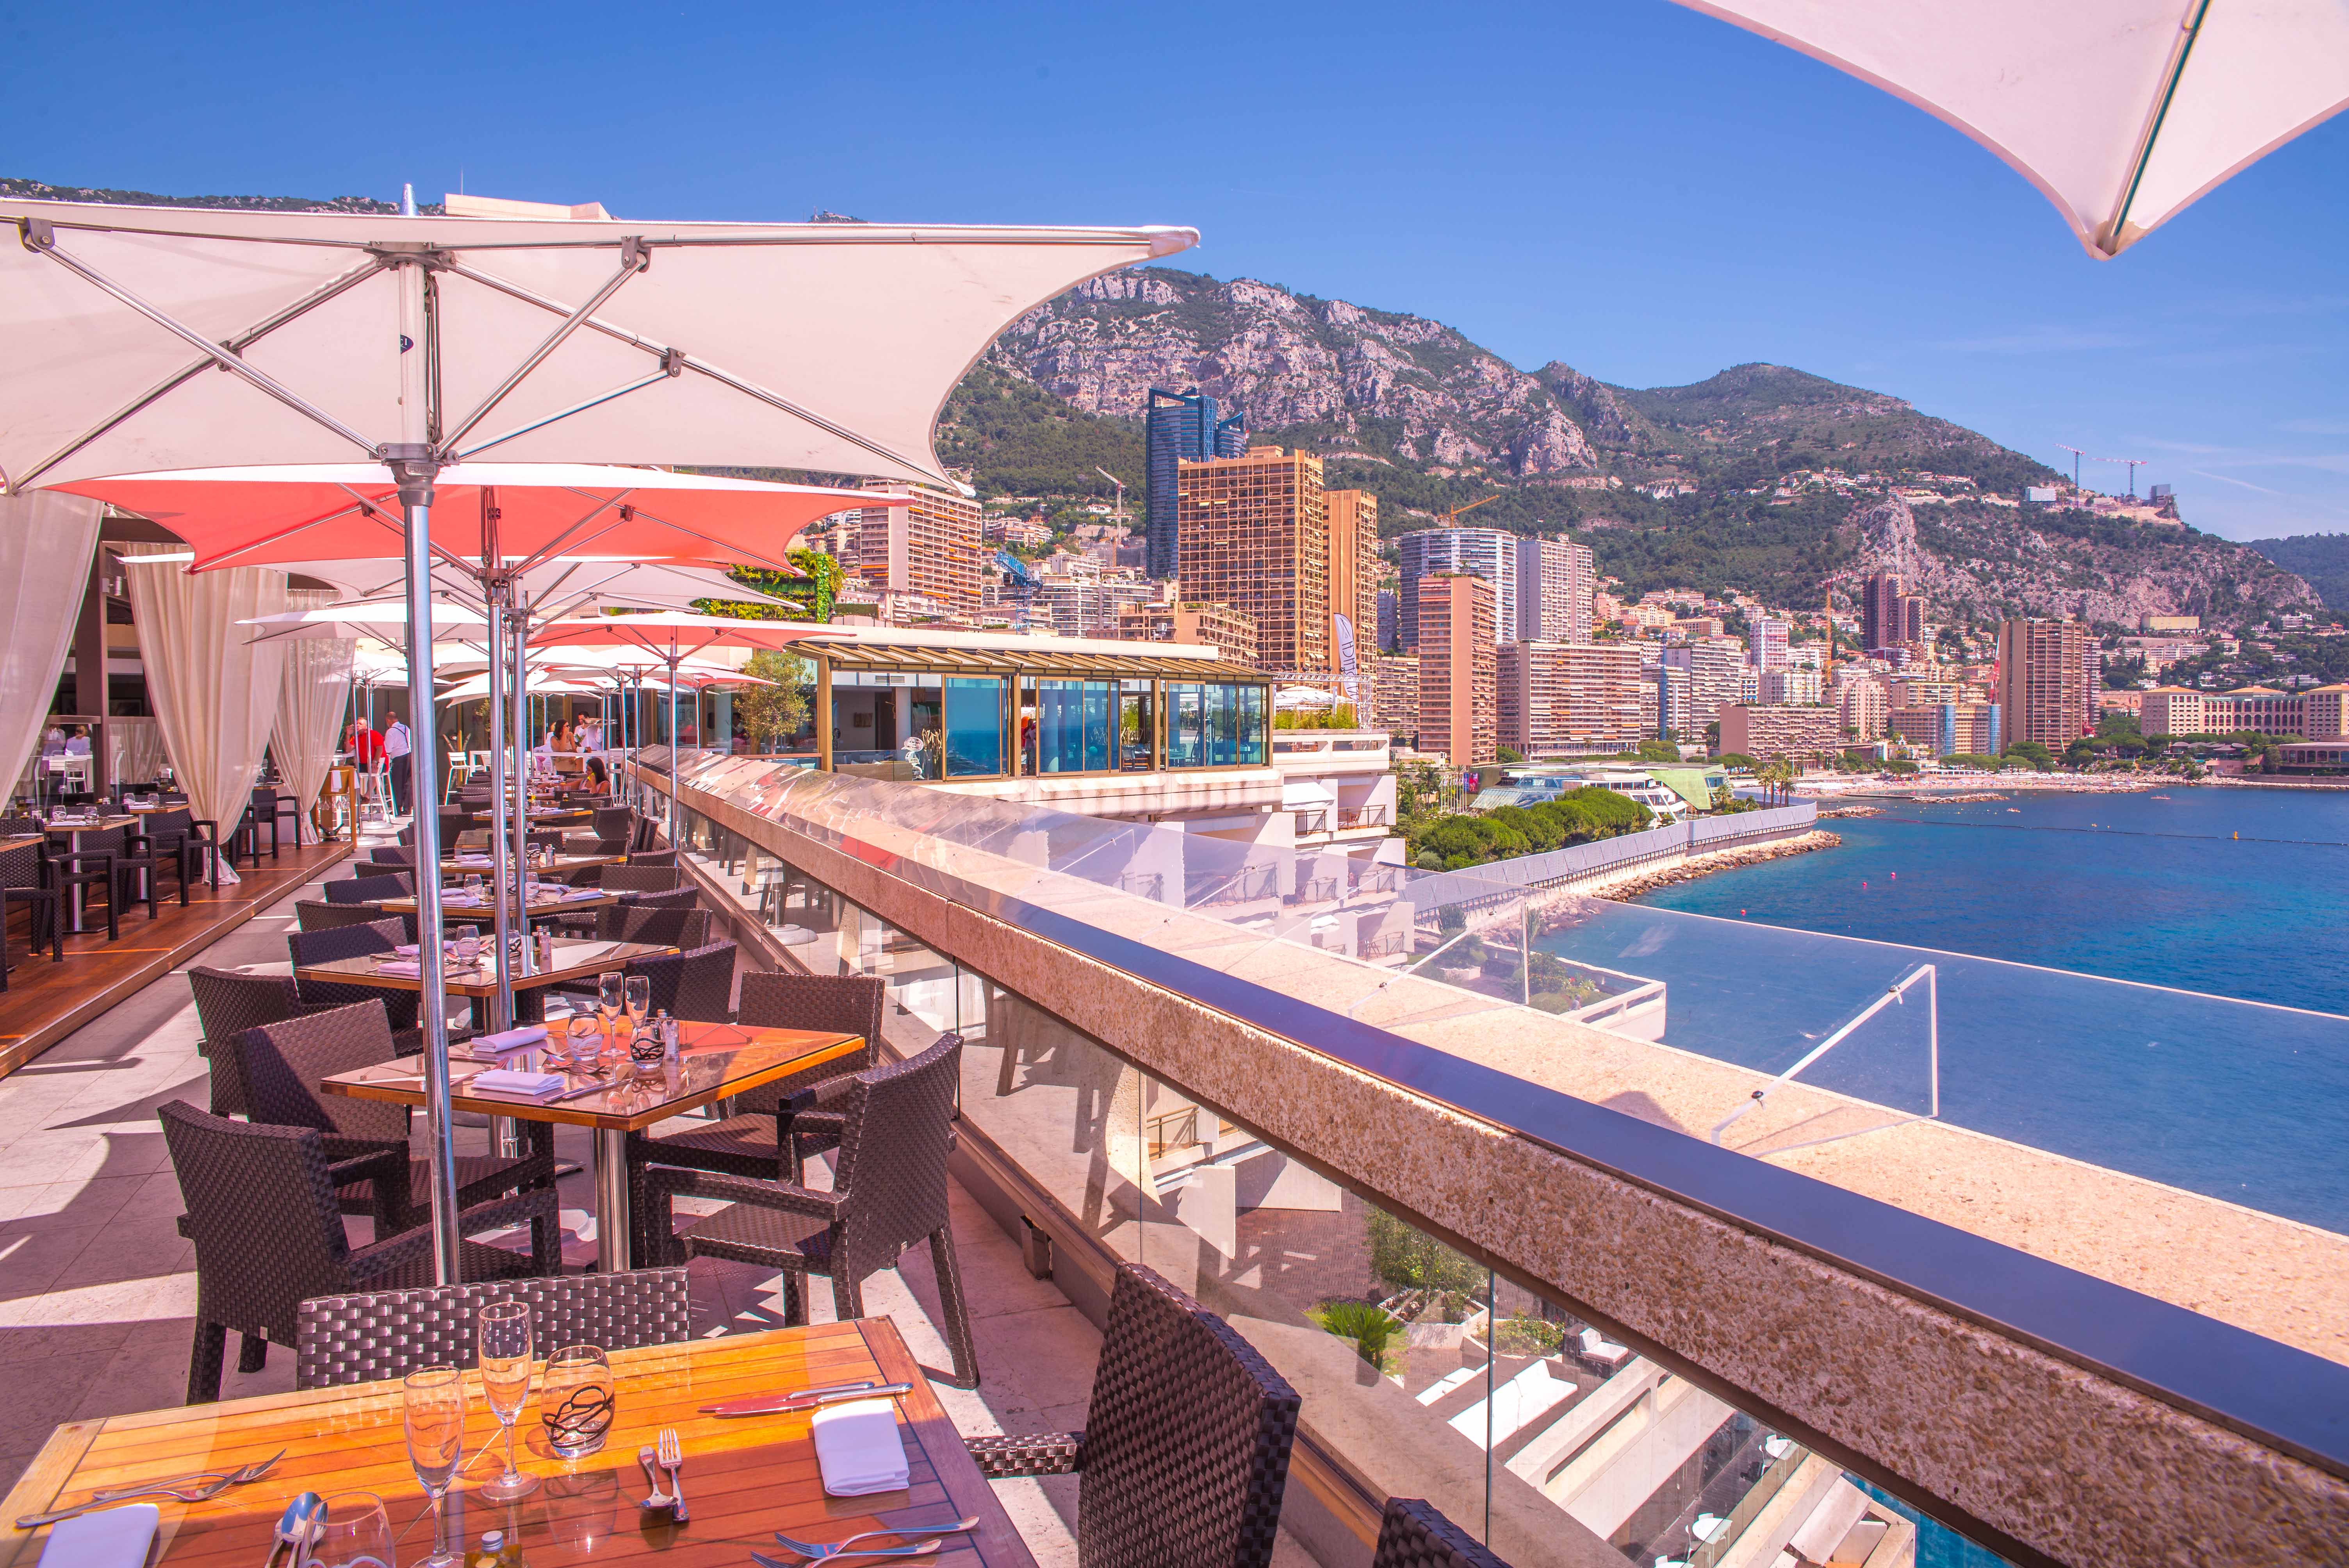 Fairmont Monaco MonteCarlo pink sunday horizon deck blog voyage icietlabas